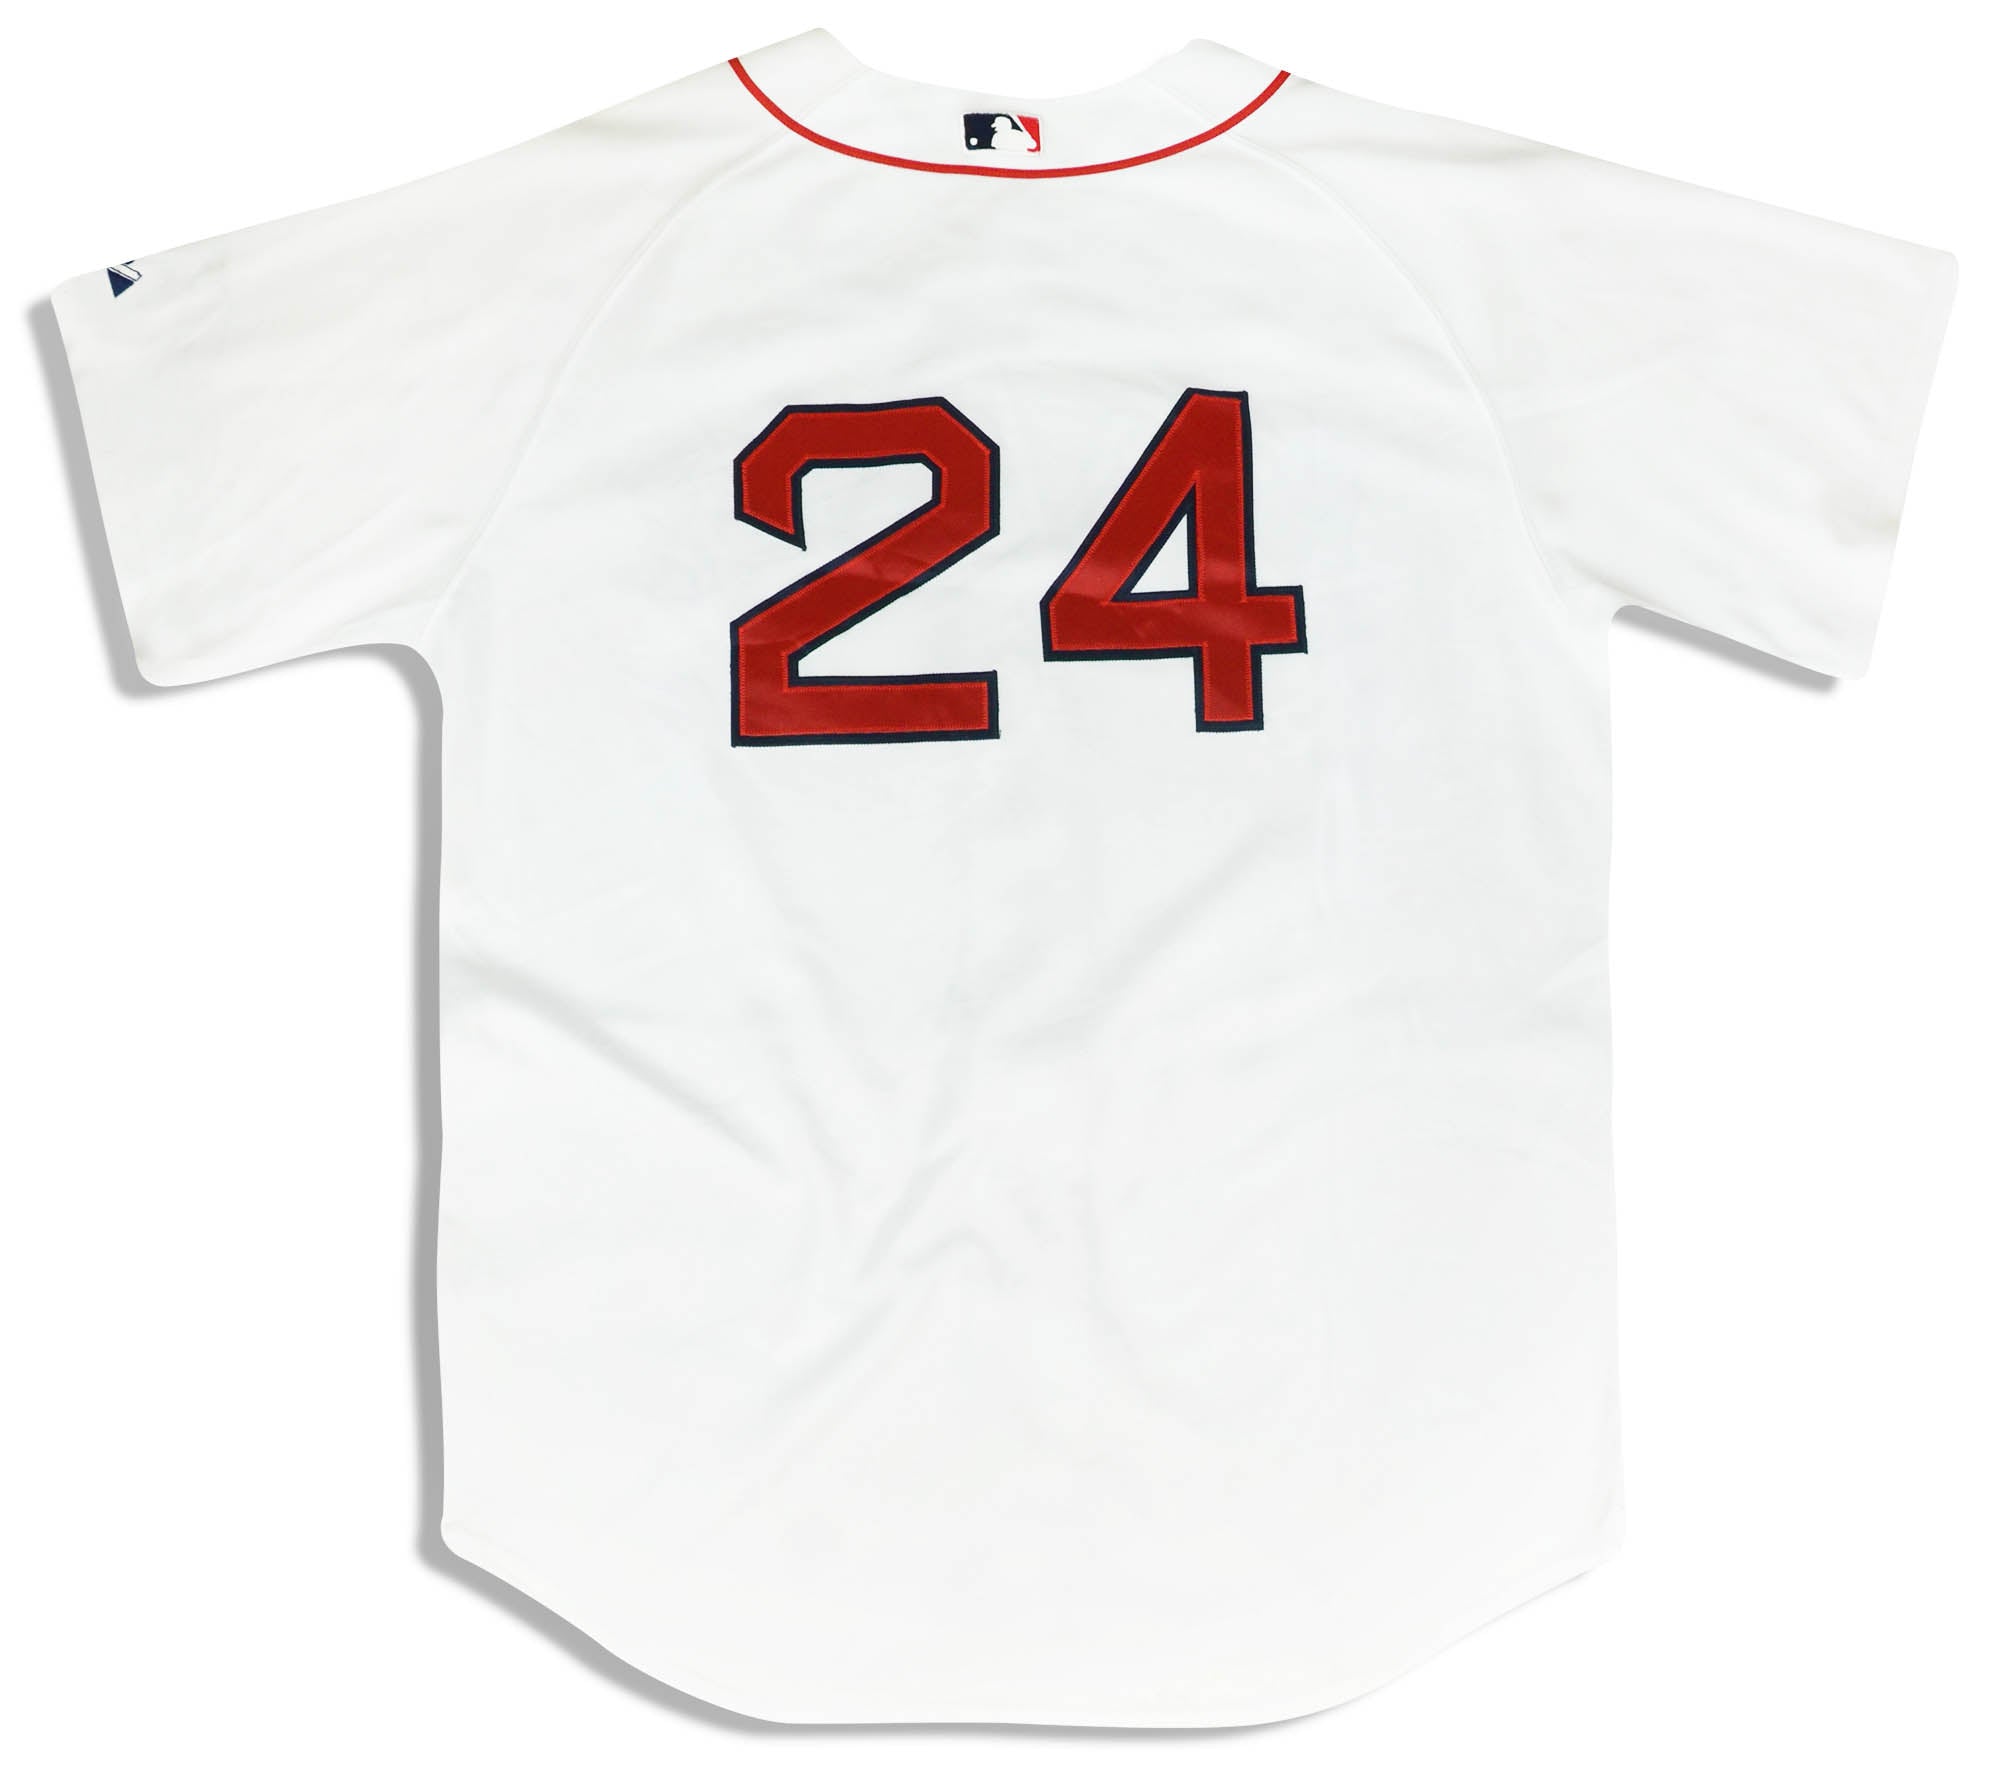 24 MANNY RAMIREZ Boston Red Sox MLB OF Grey Throwback Jersey